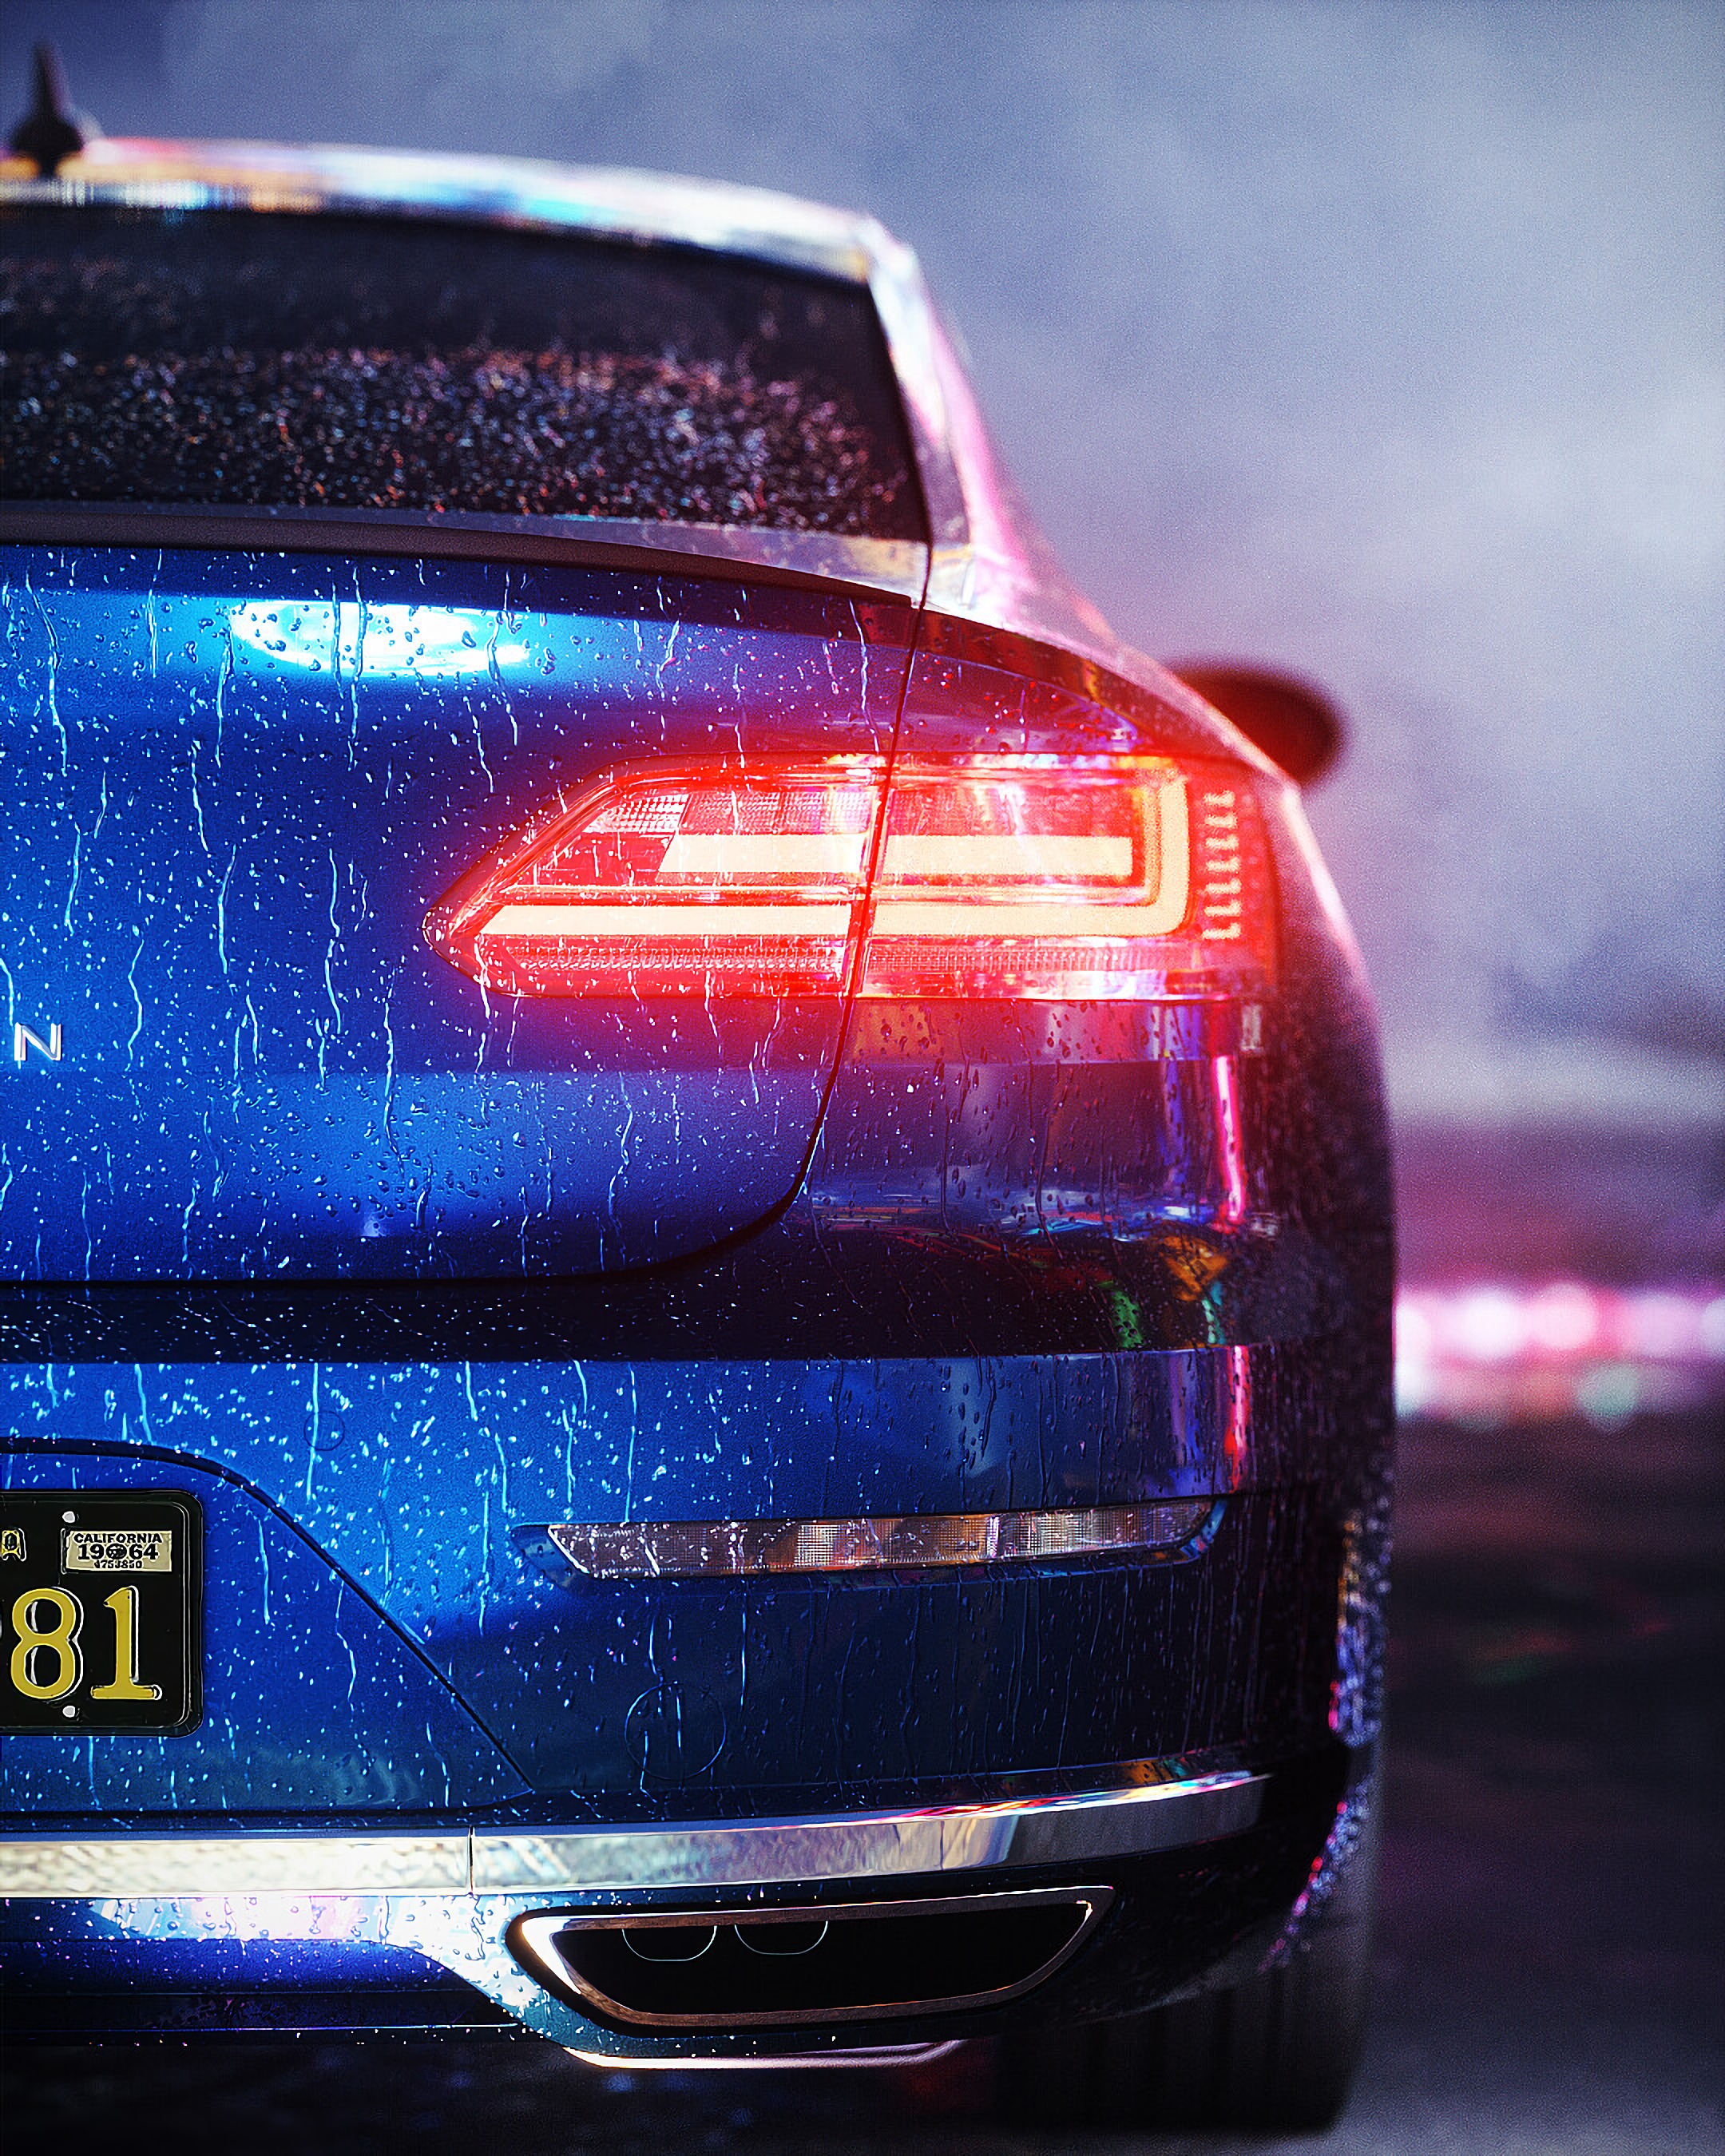 back view, backlight, blue, car, light, cars, shine, wet, machine, illumination, rear view